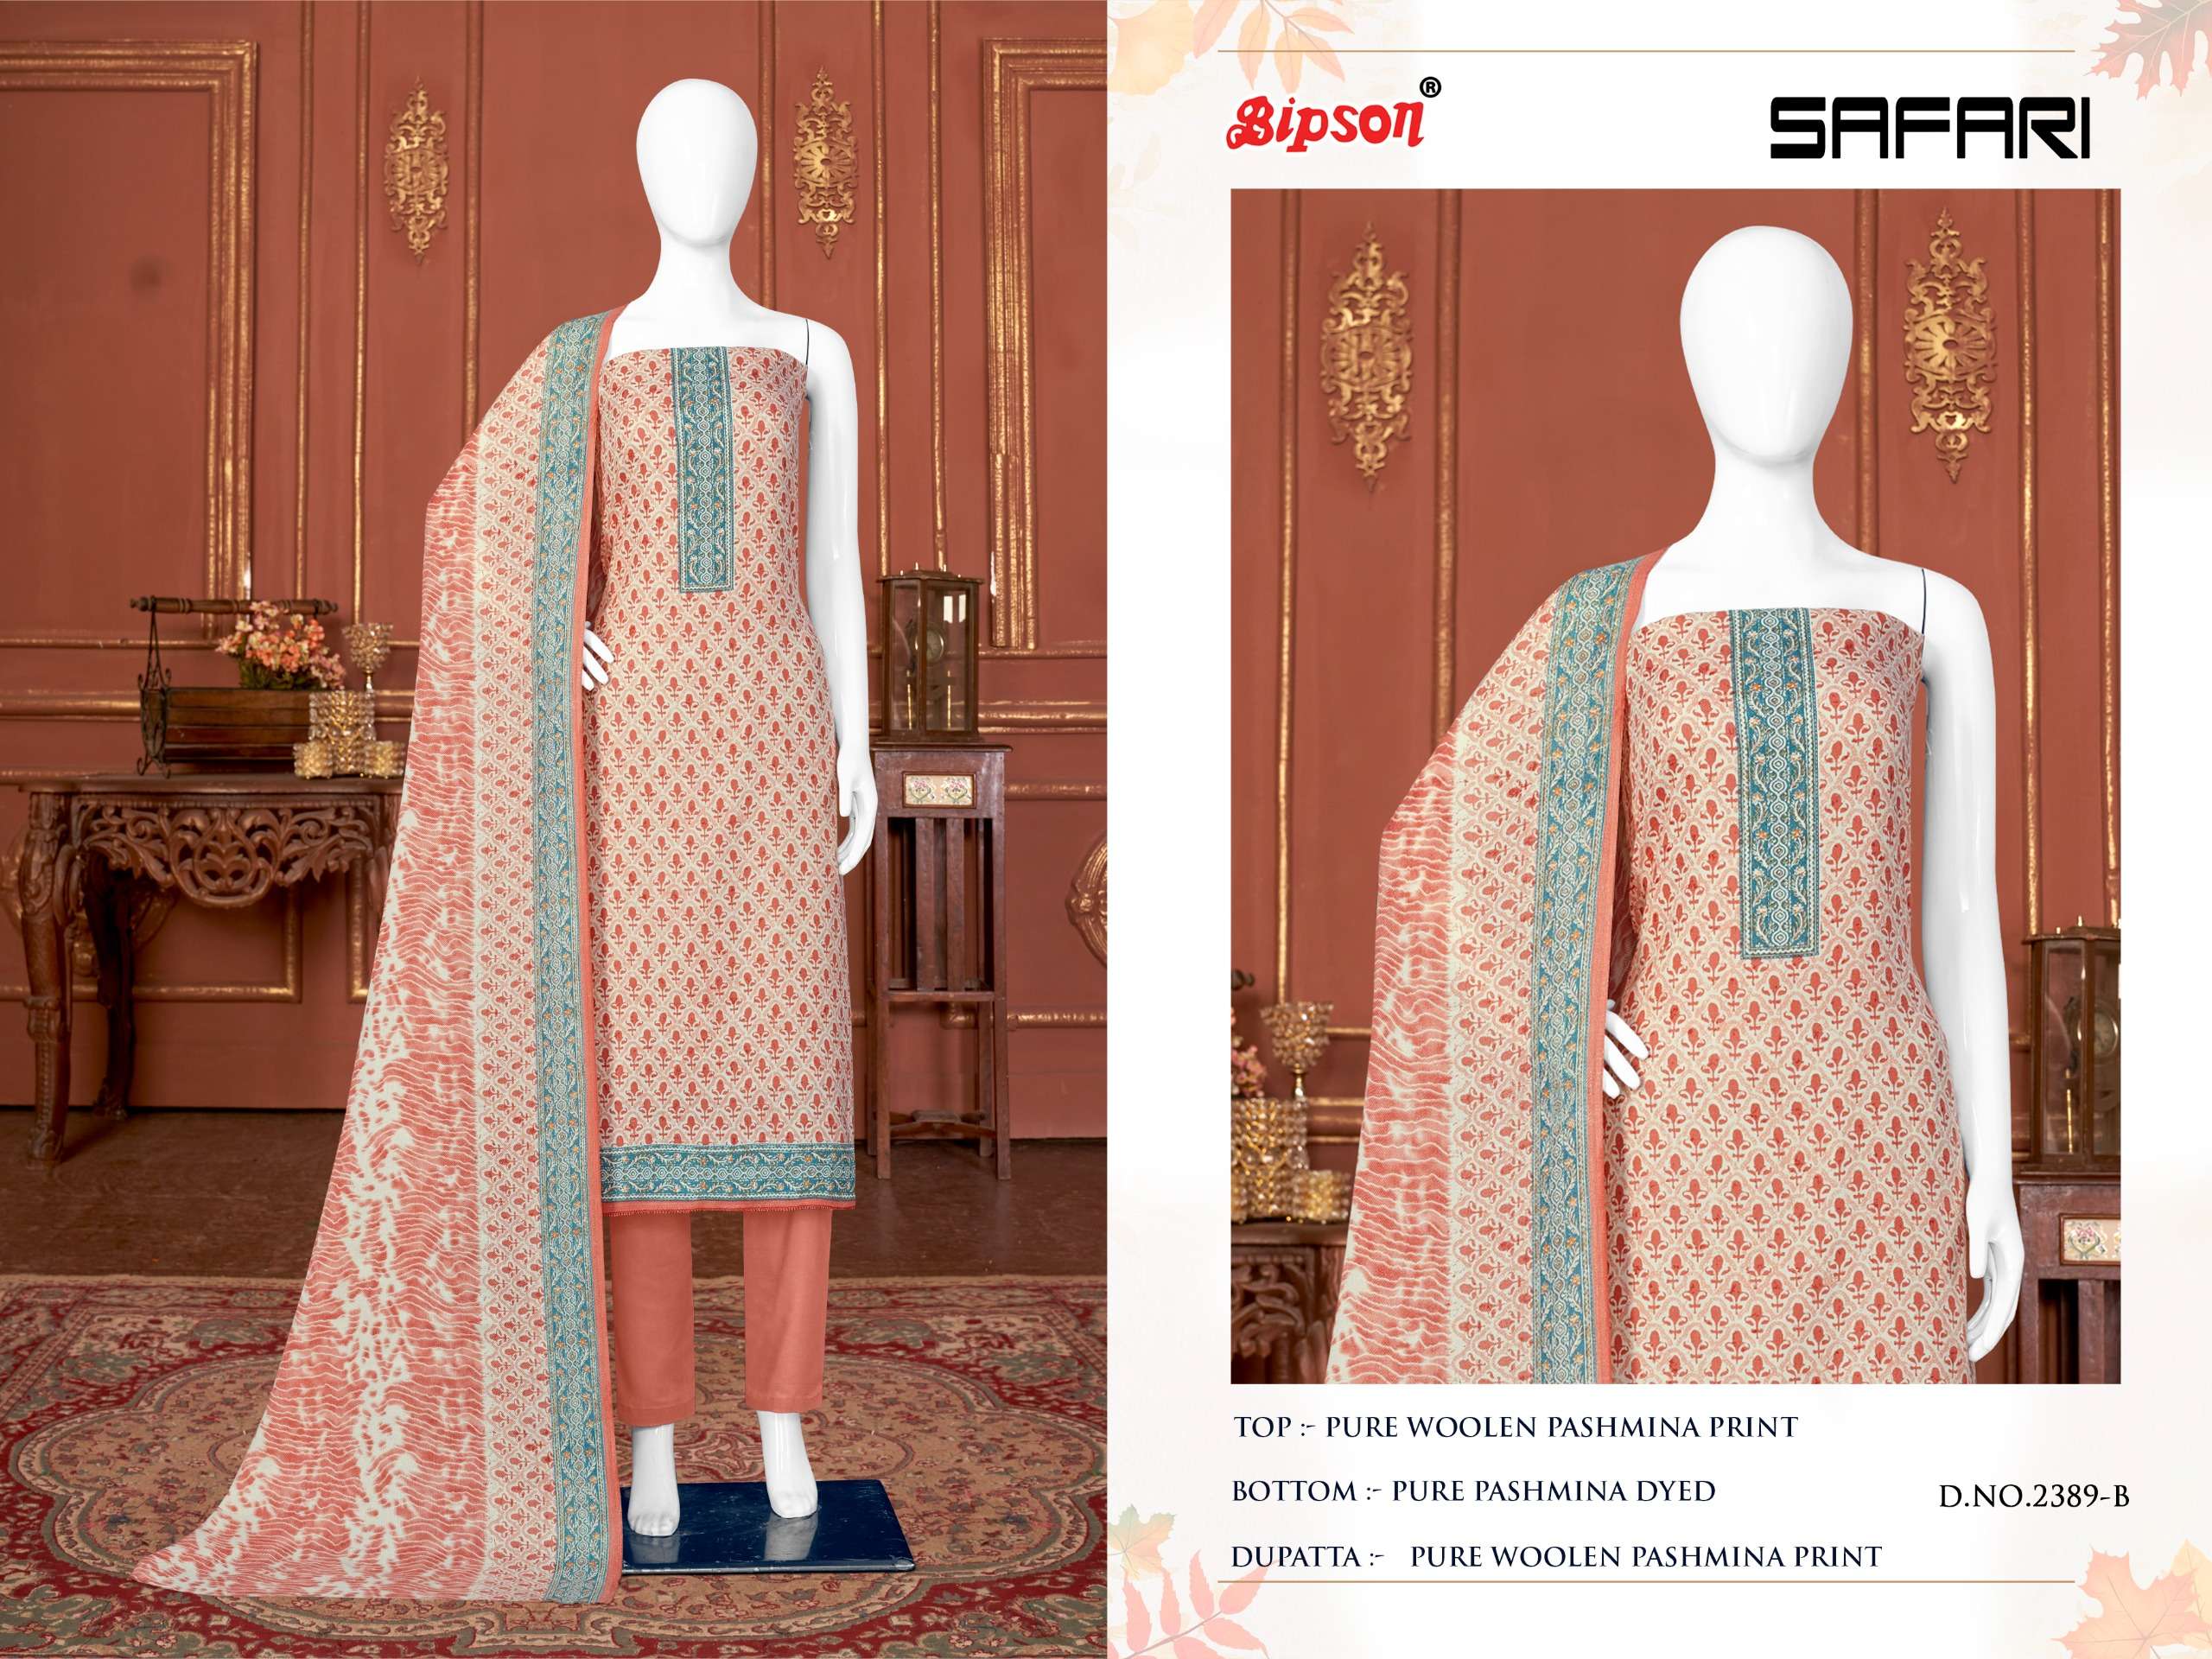 bipson  safari 2389 wool pashmina digital print graceful look salwar suit catalog